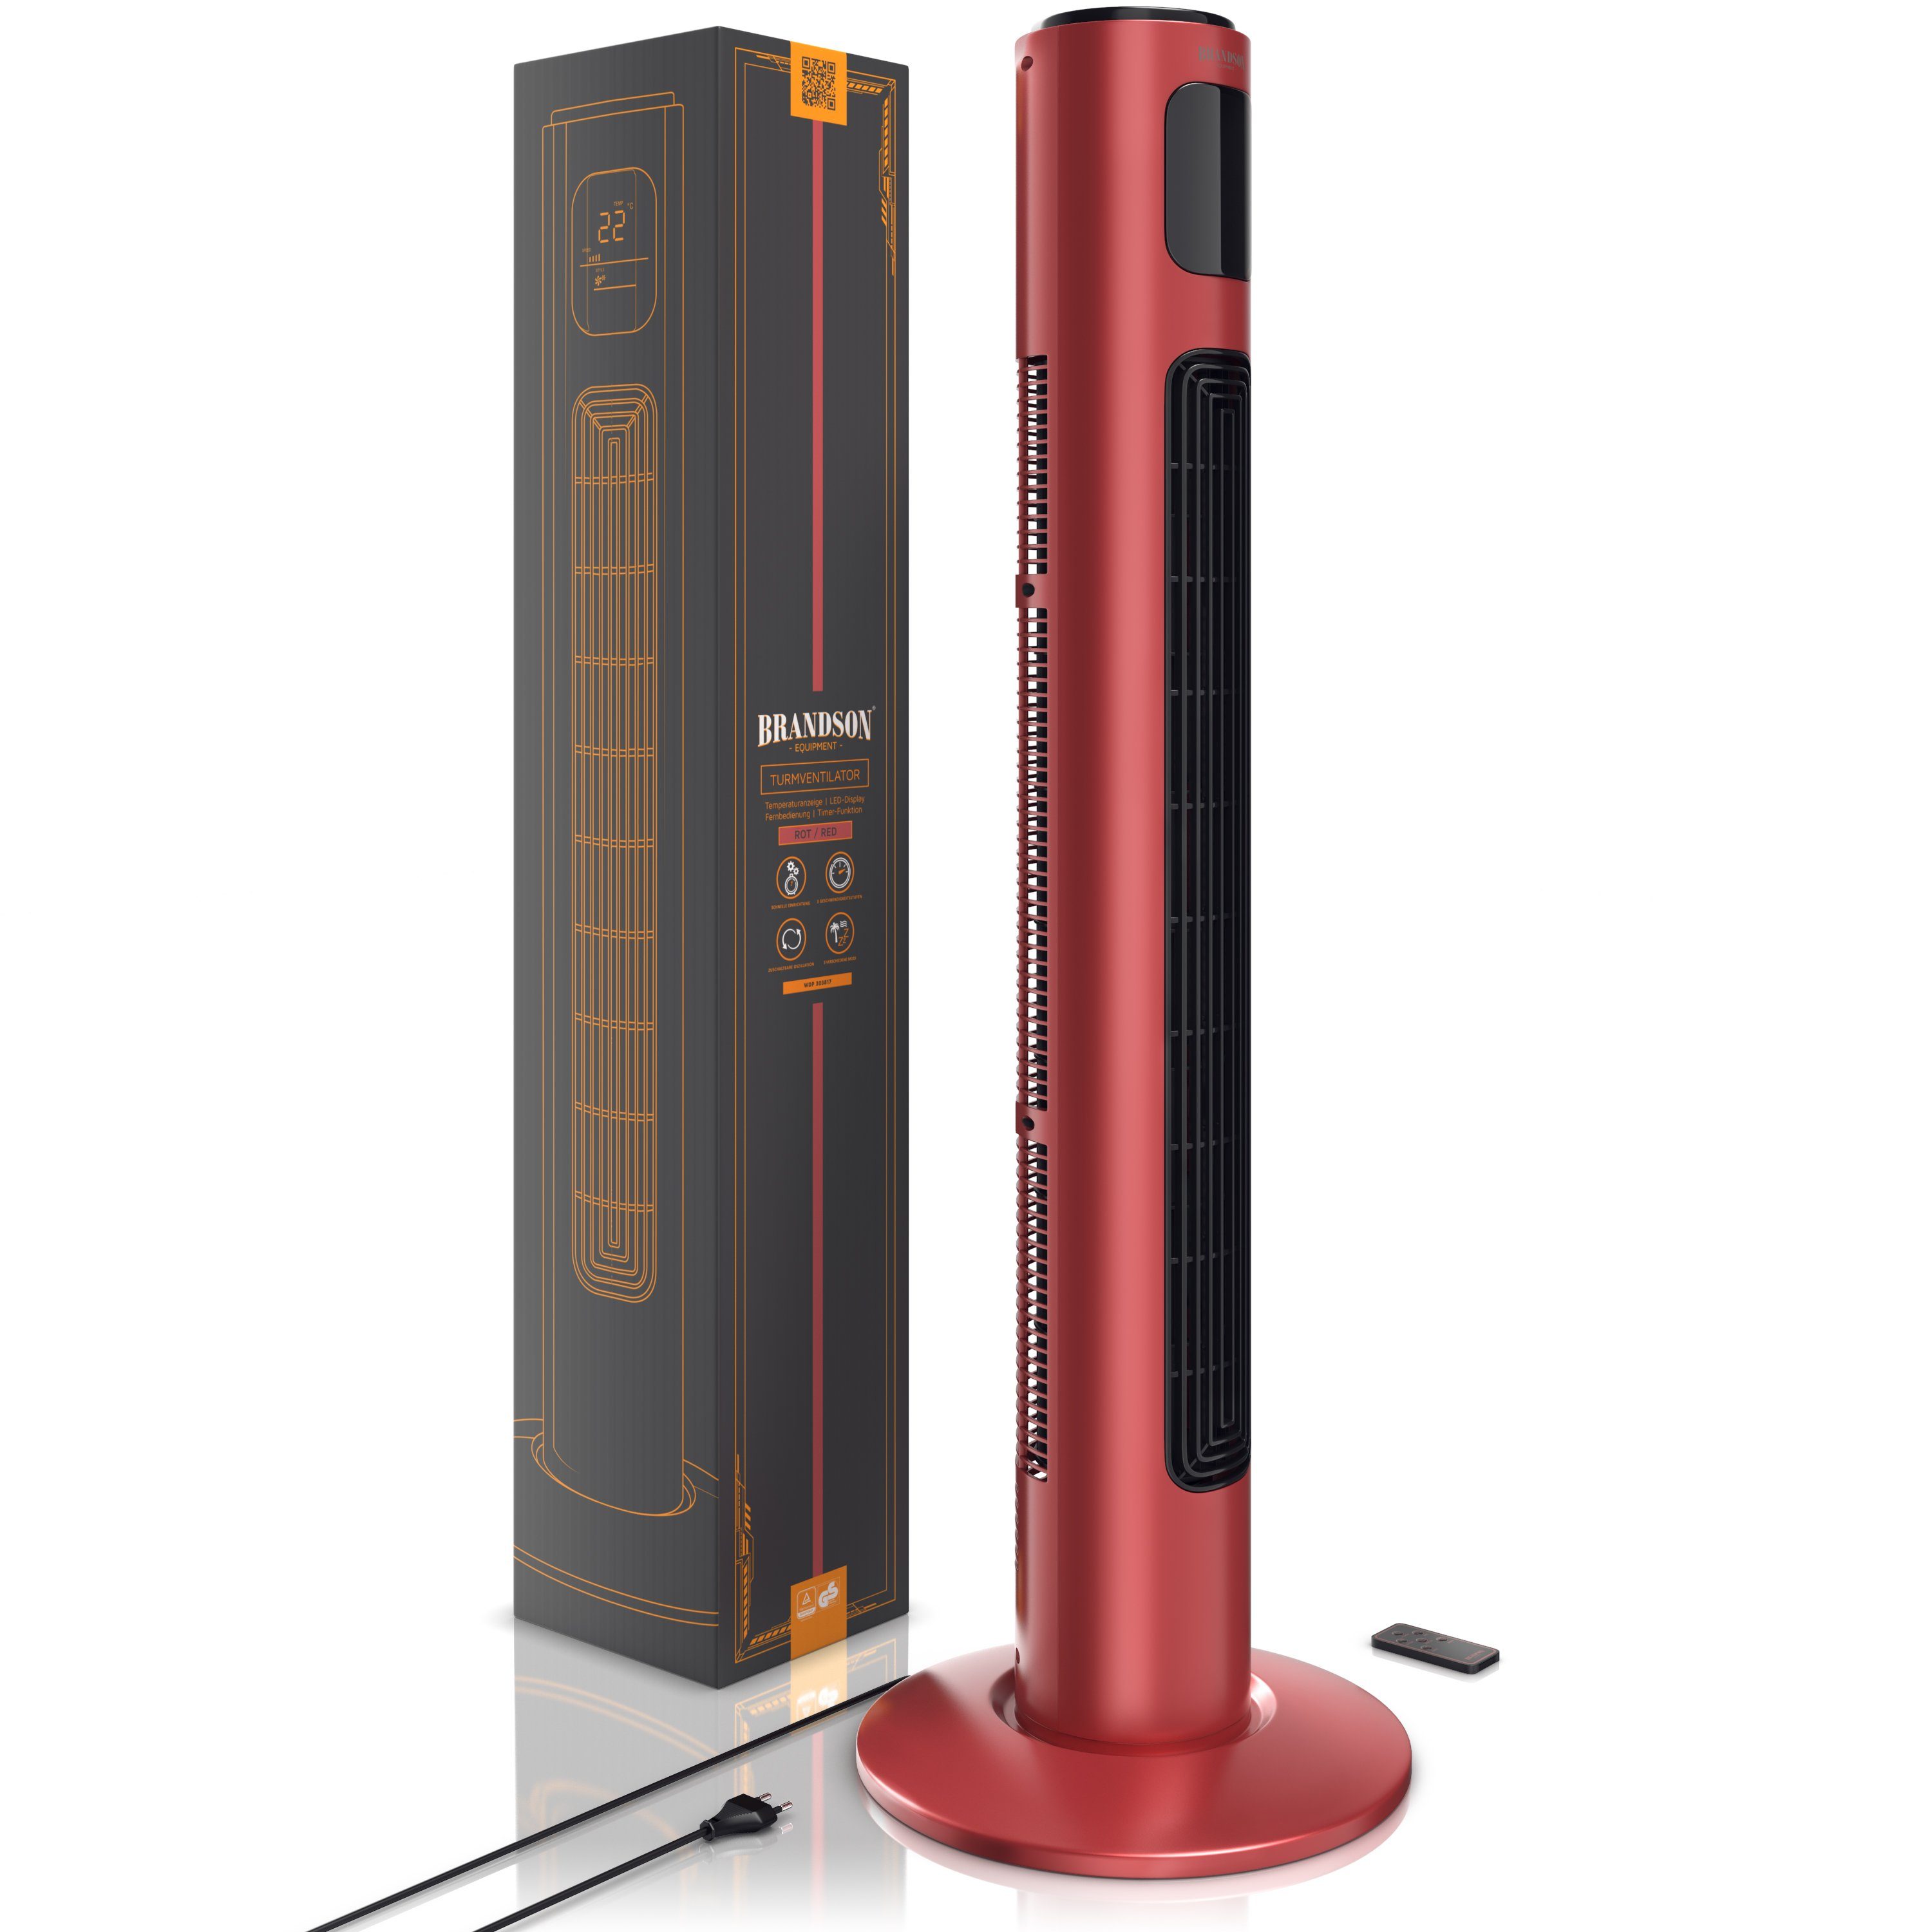 Brandson Turmventilator, Timer, Standventilator Rubinrot Fernbedienung, 96cm, Oszillation 65°